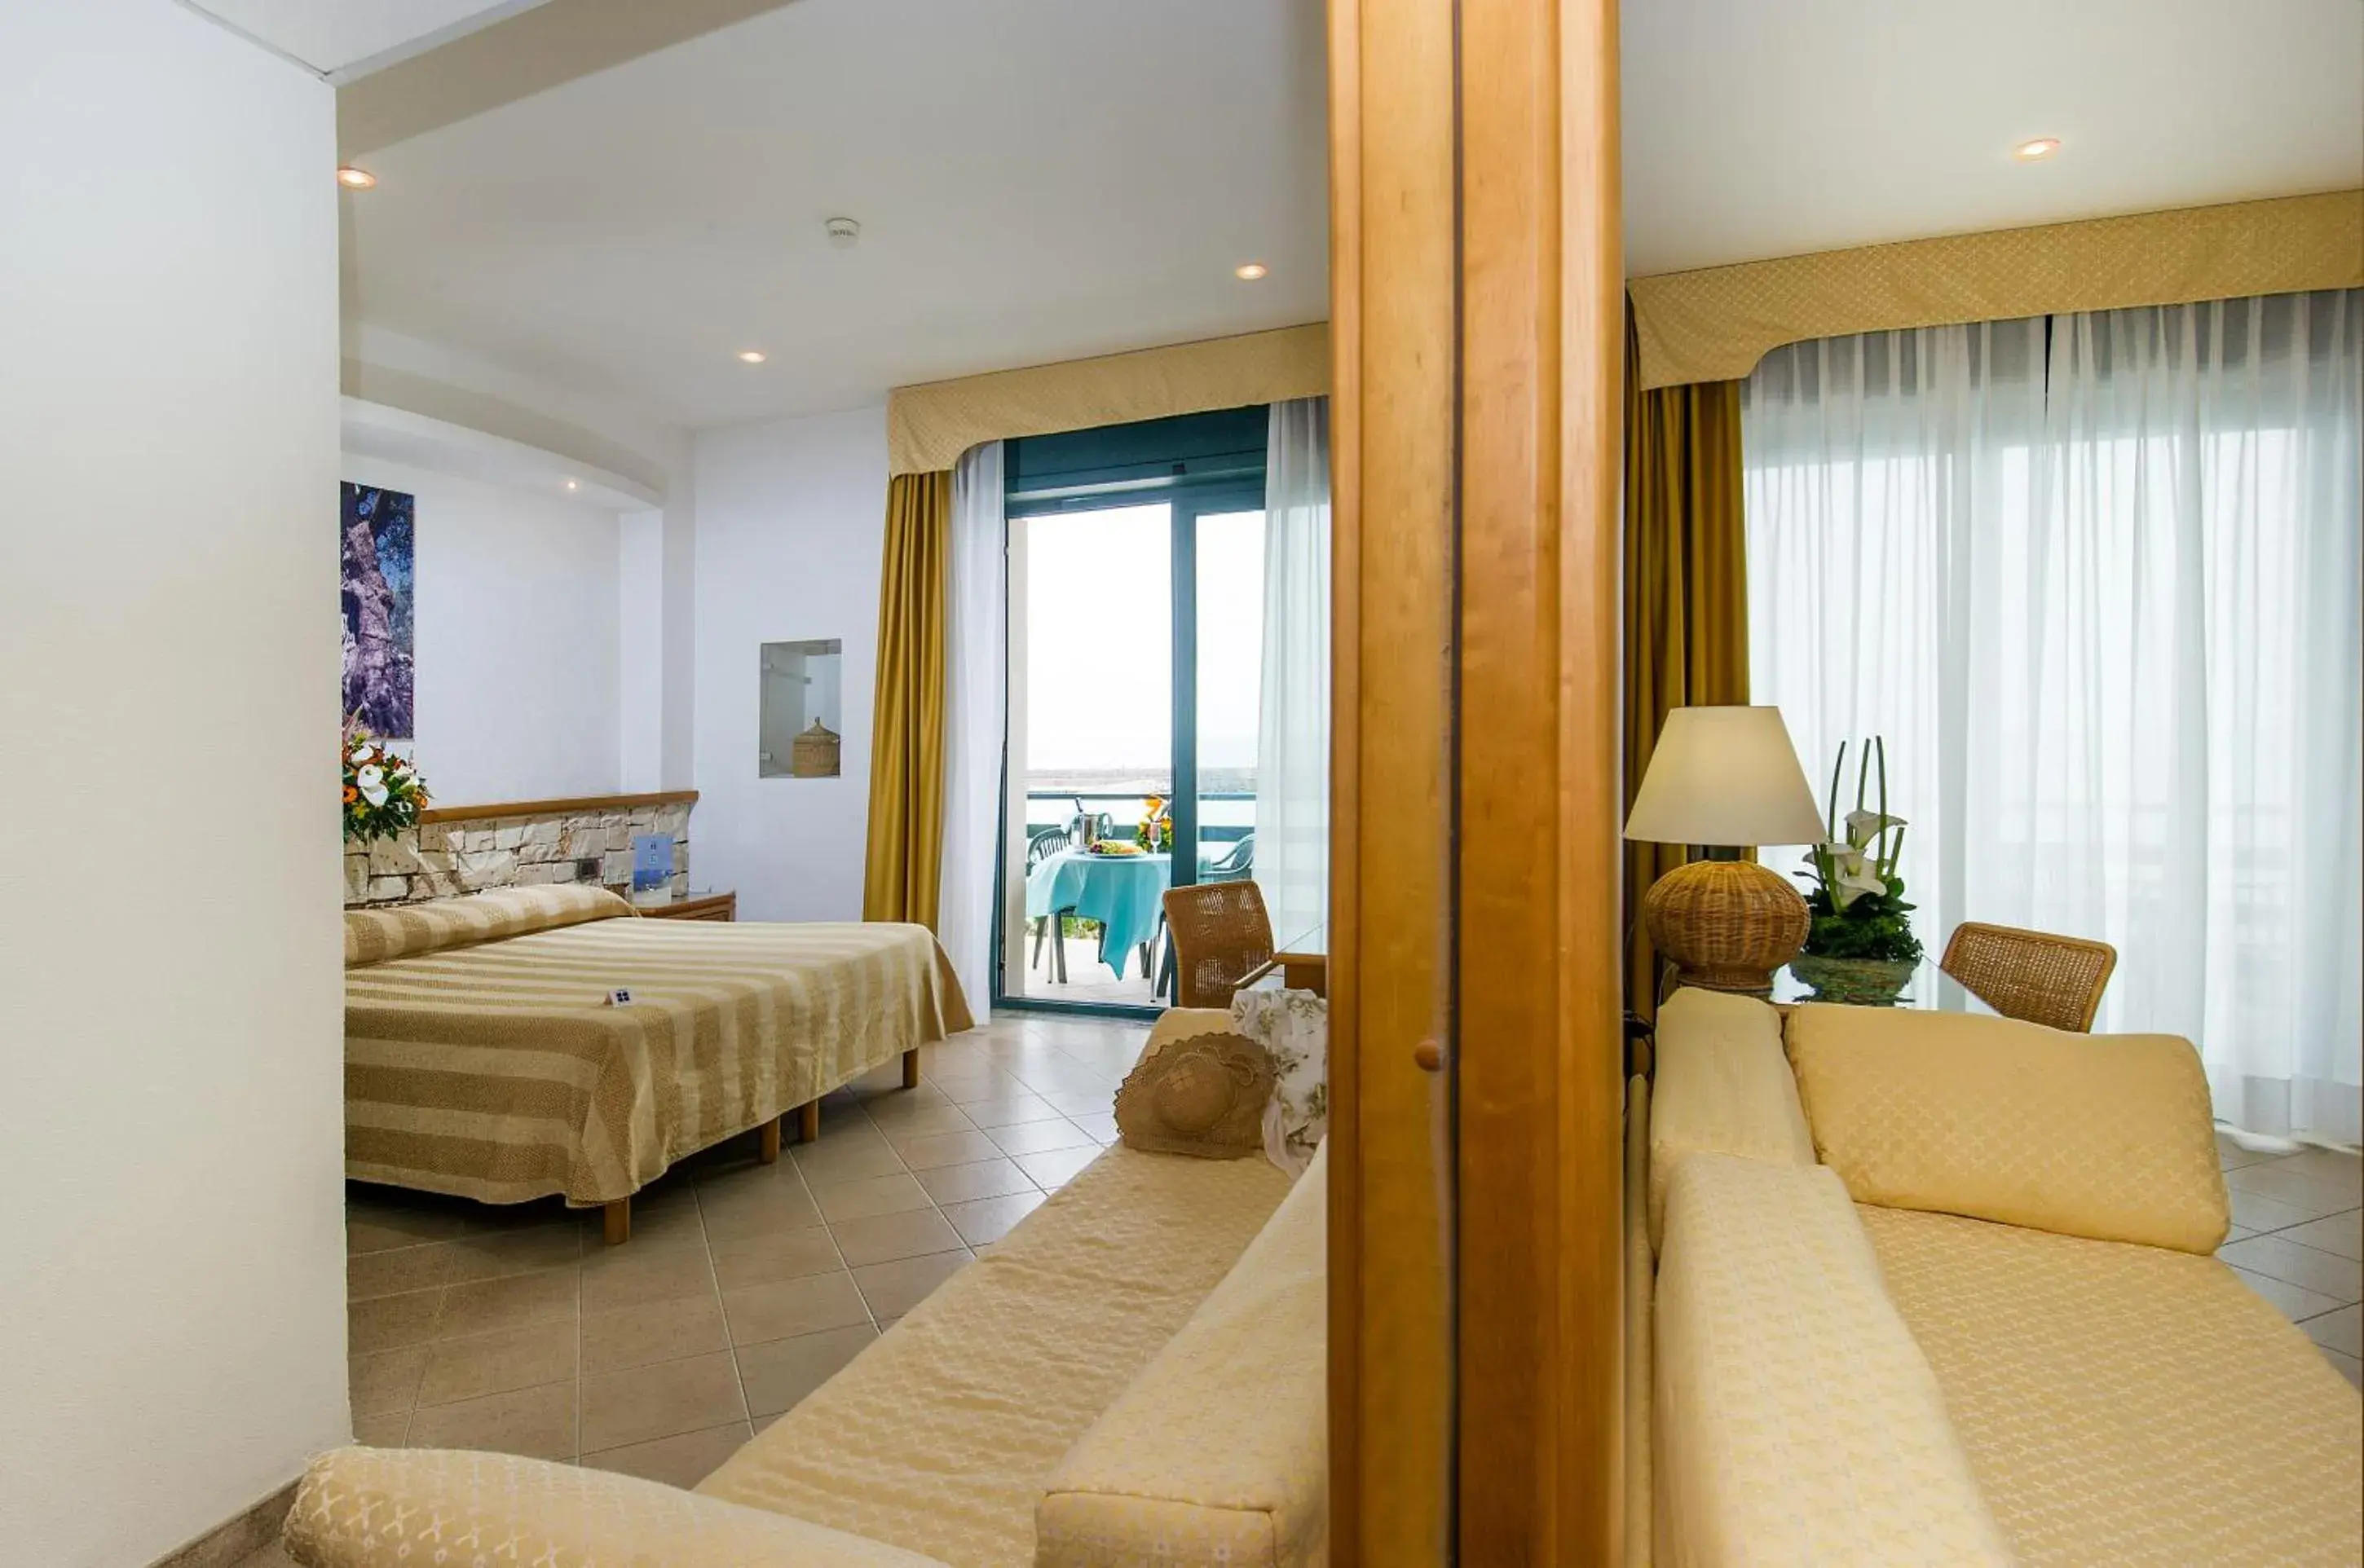 Bed, Room Photo in Hotel Terminal - Caroli Hotels